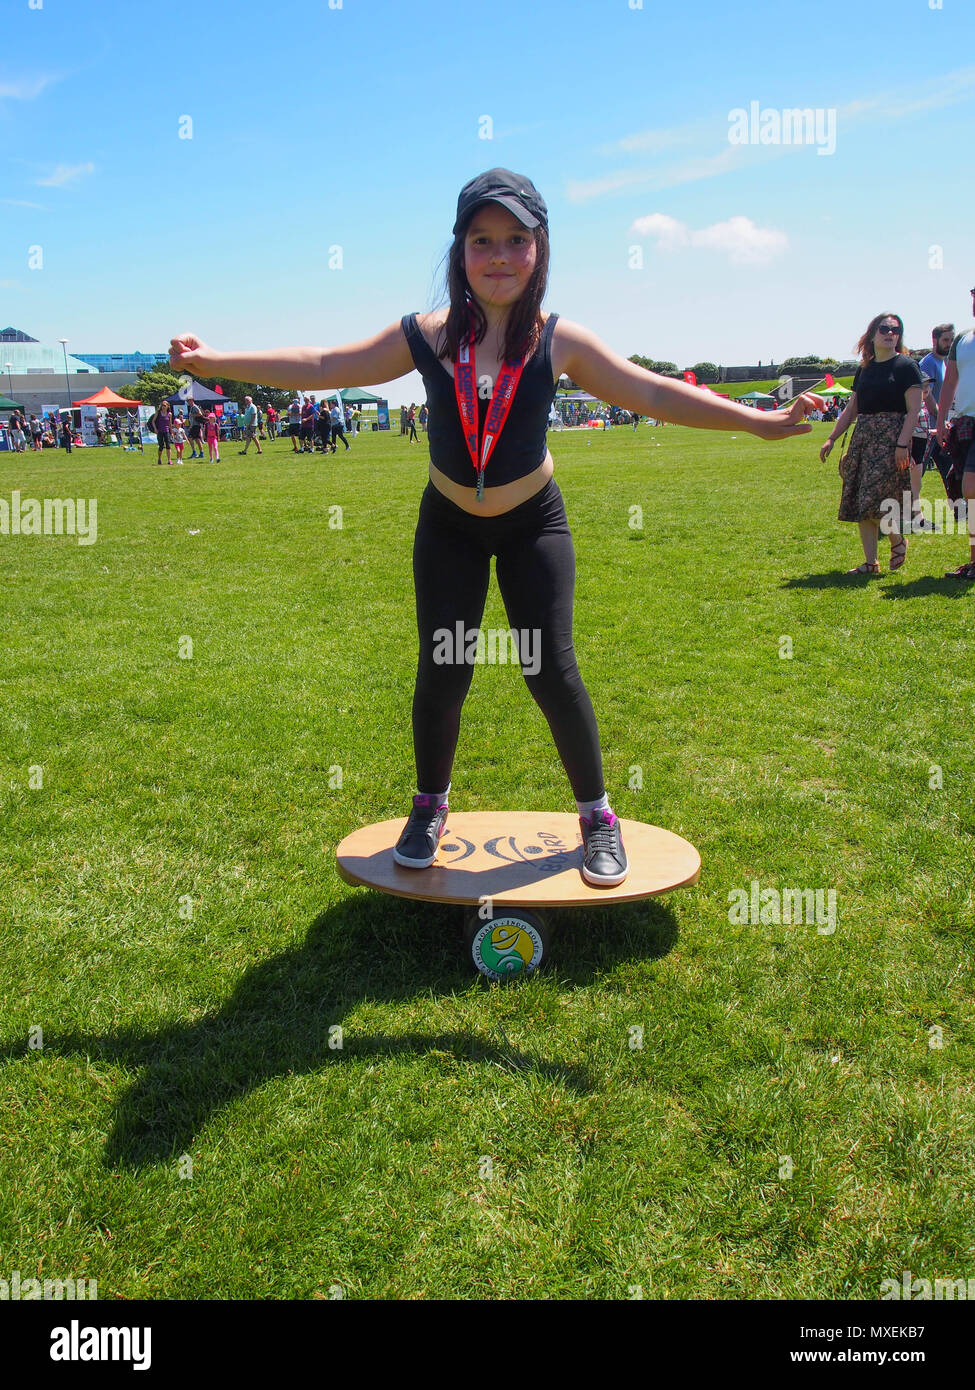 A young girl balances on a balance board Stock Photo